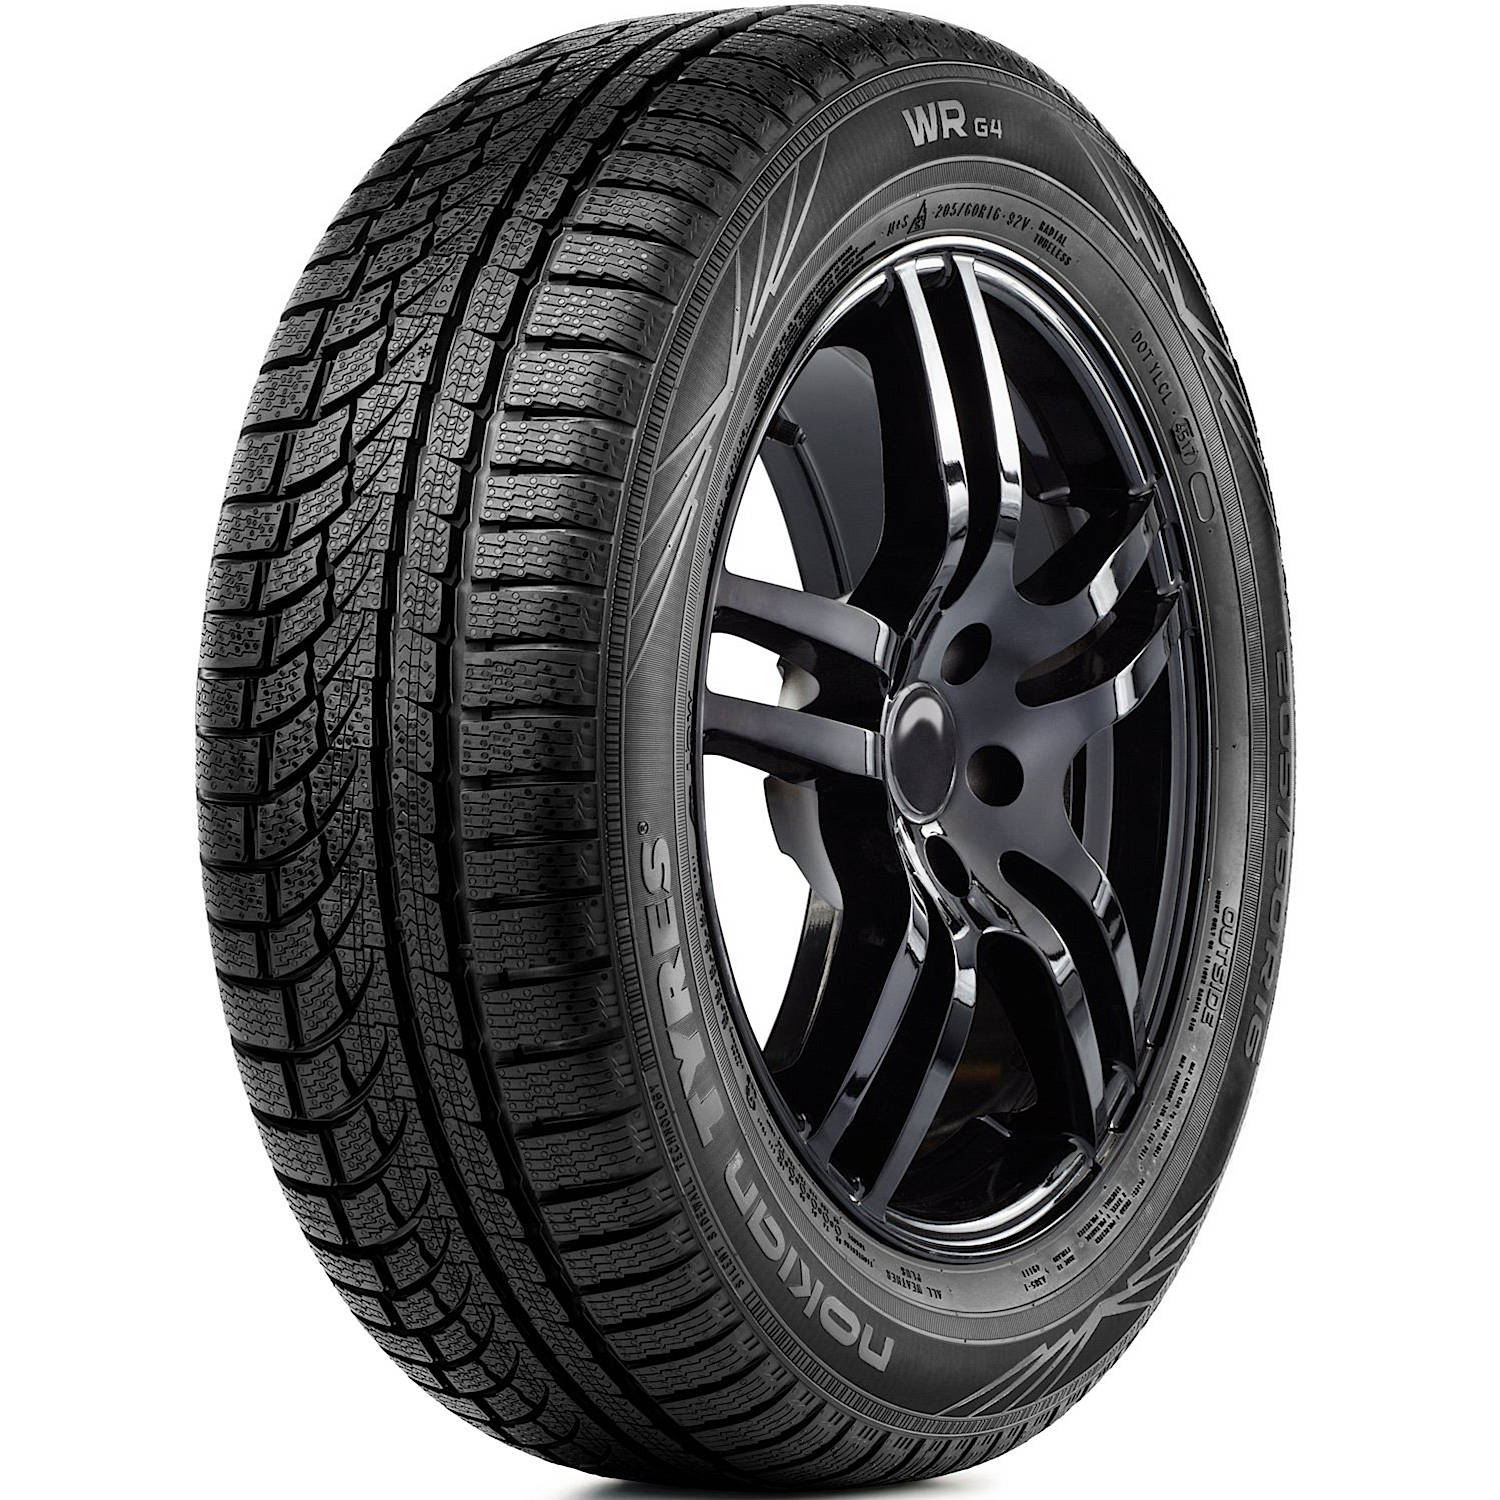 NOKIAN WR G4 215/55R16 (25.3X8.5R 16) Tires